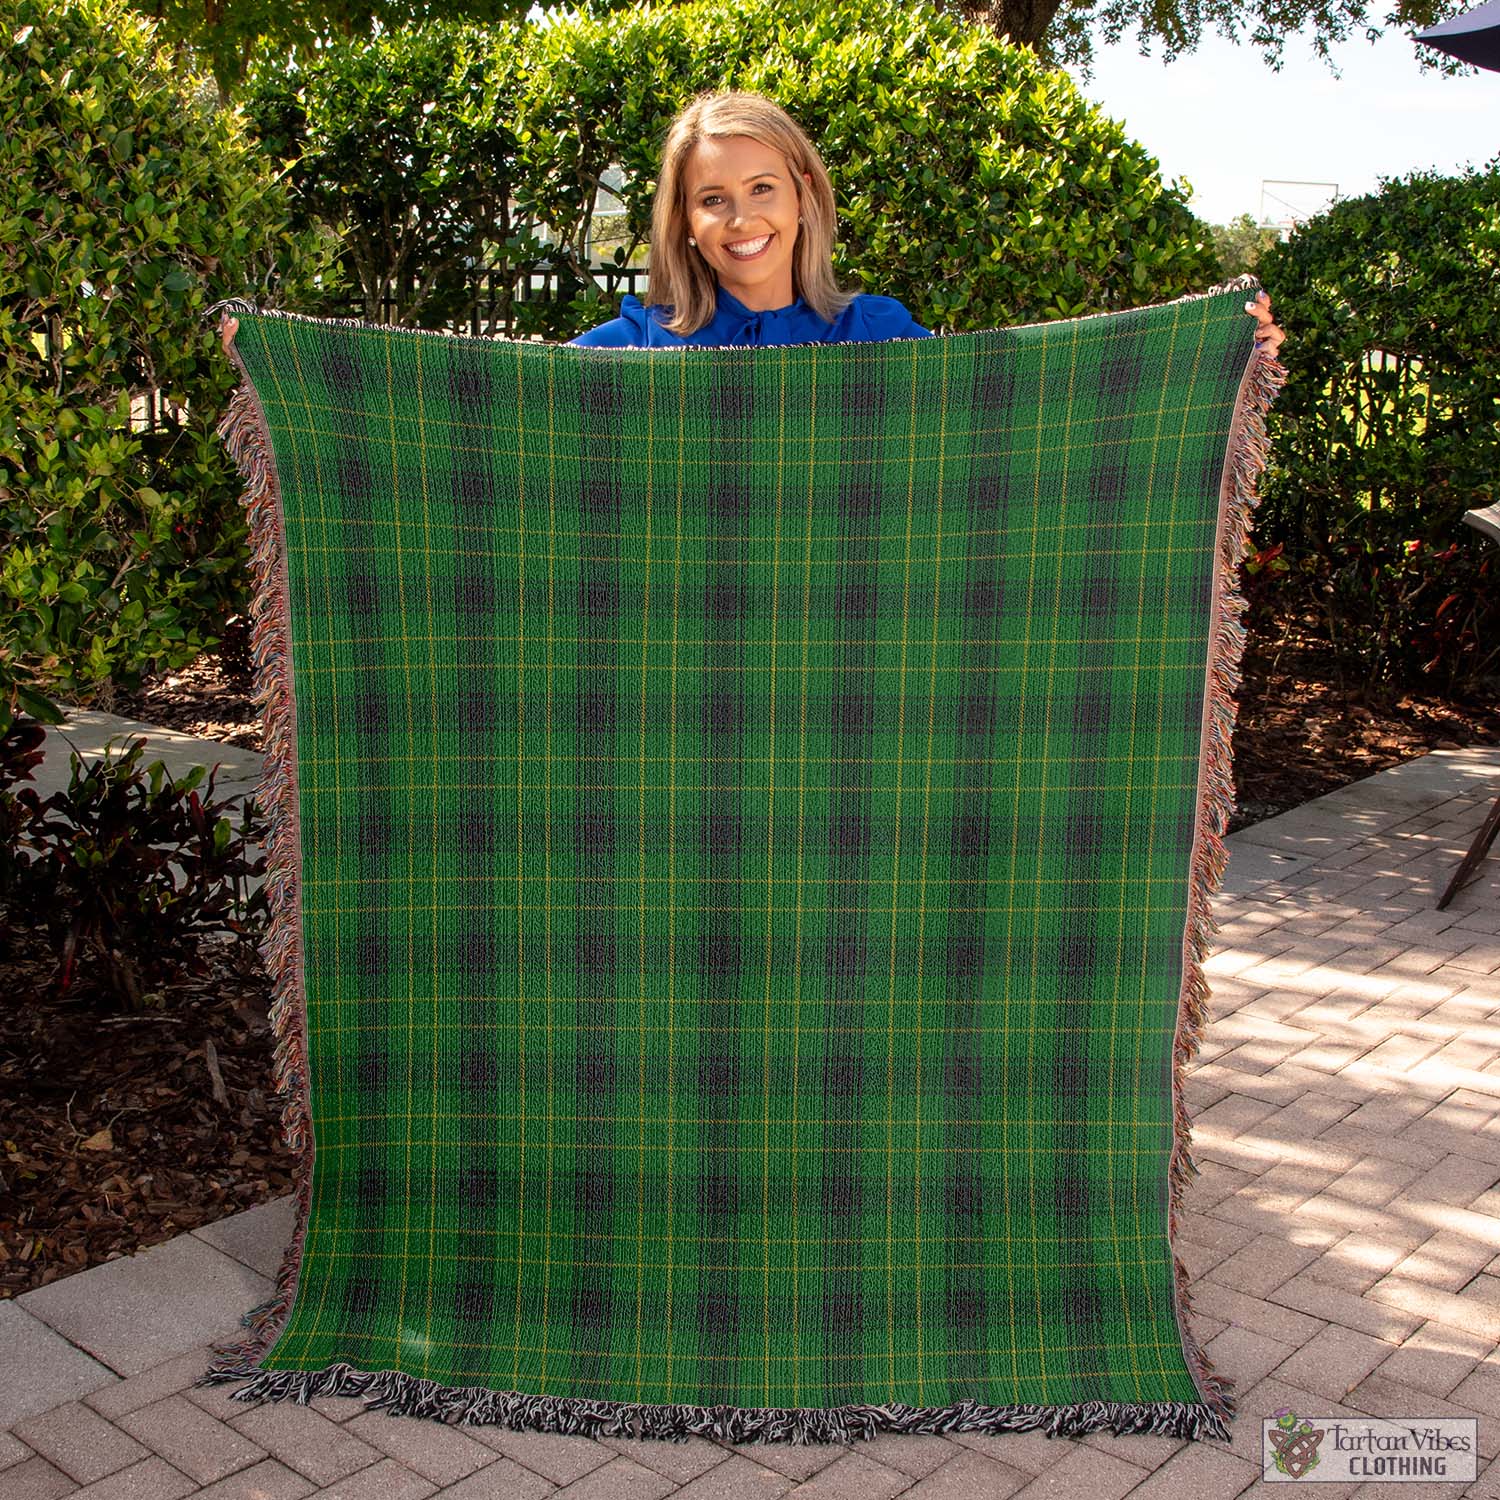 Tartan Vibes Clothing MacArthur Highland Tartan Woven Blanket